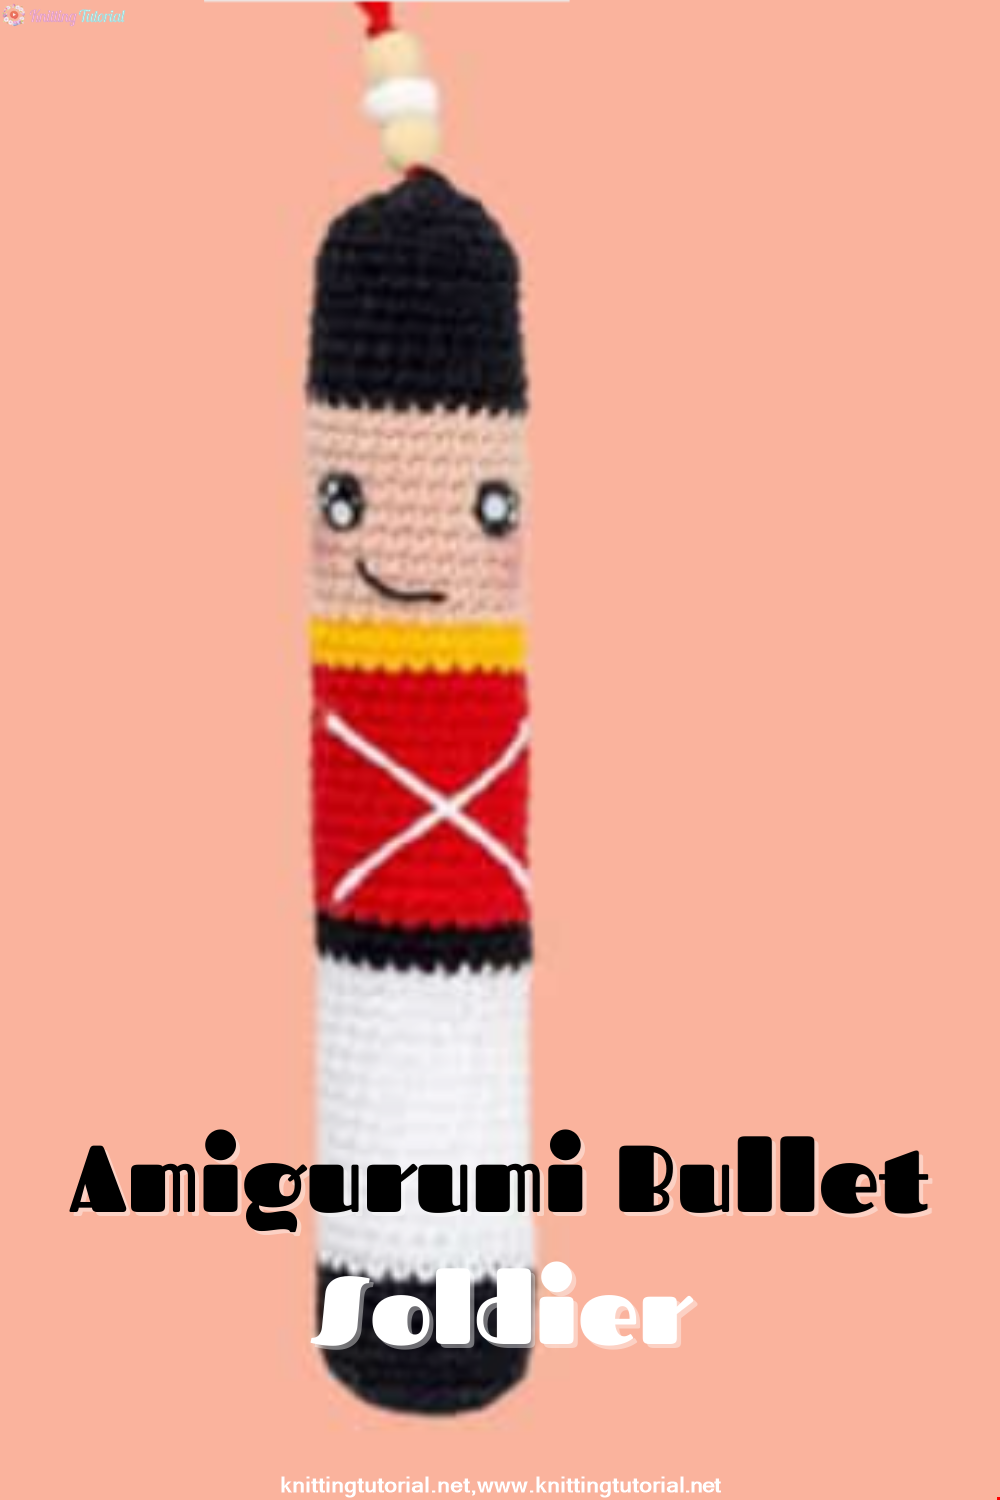 Amigurumi Bullet Soldier Recipe and Making